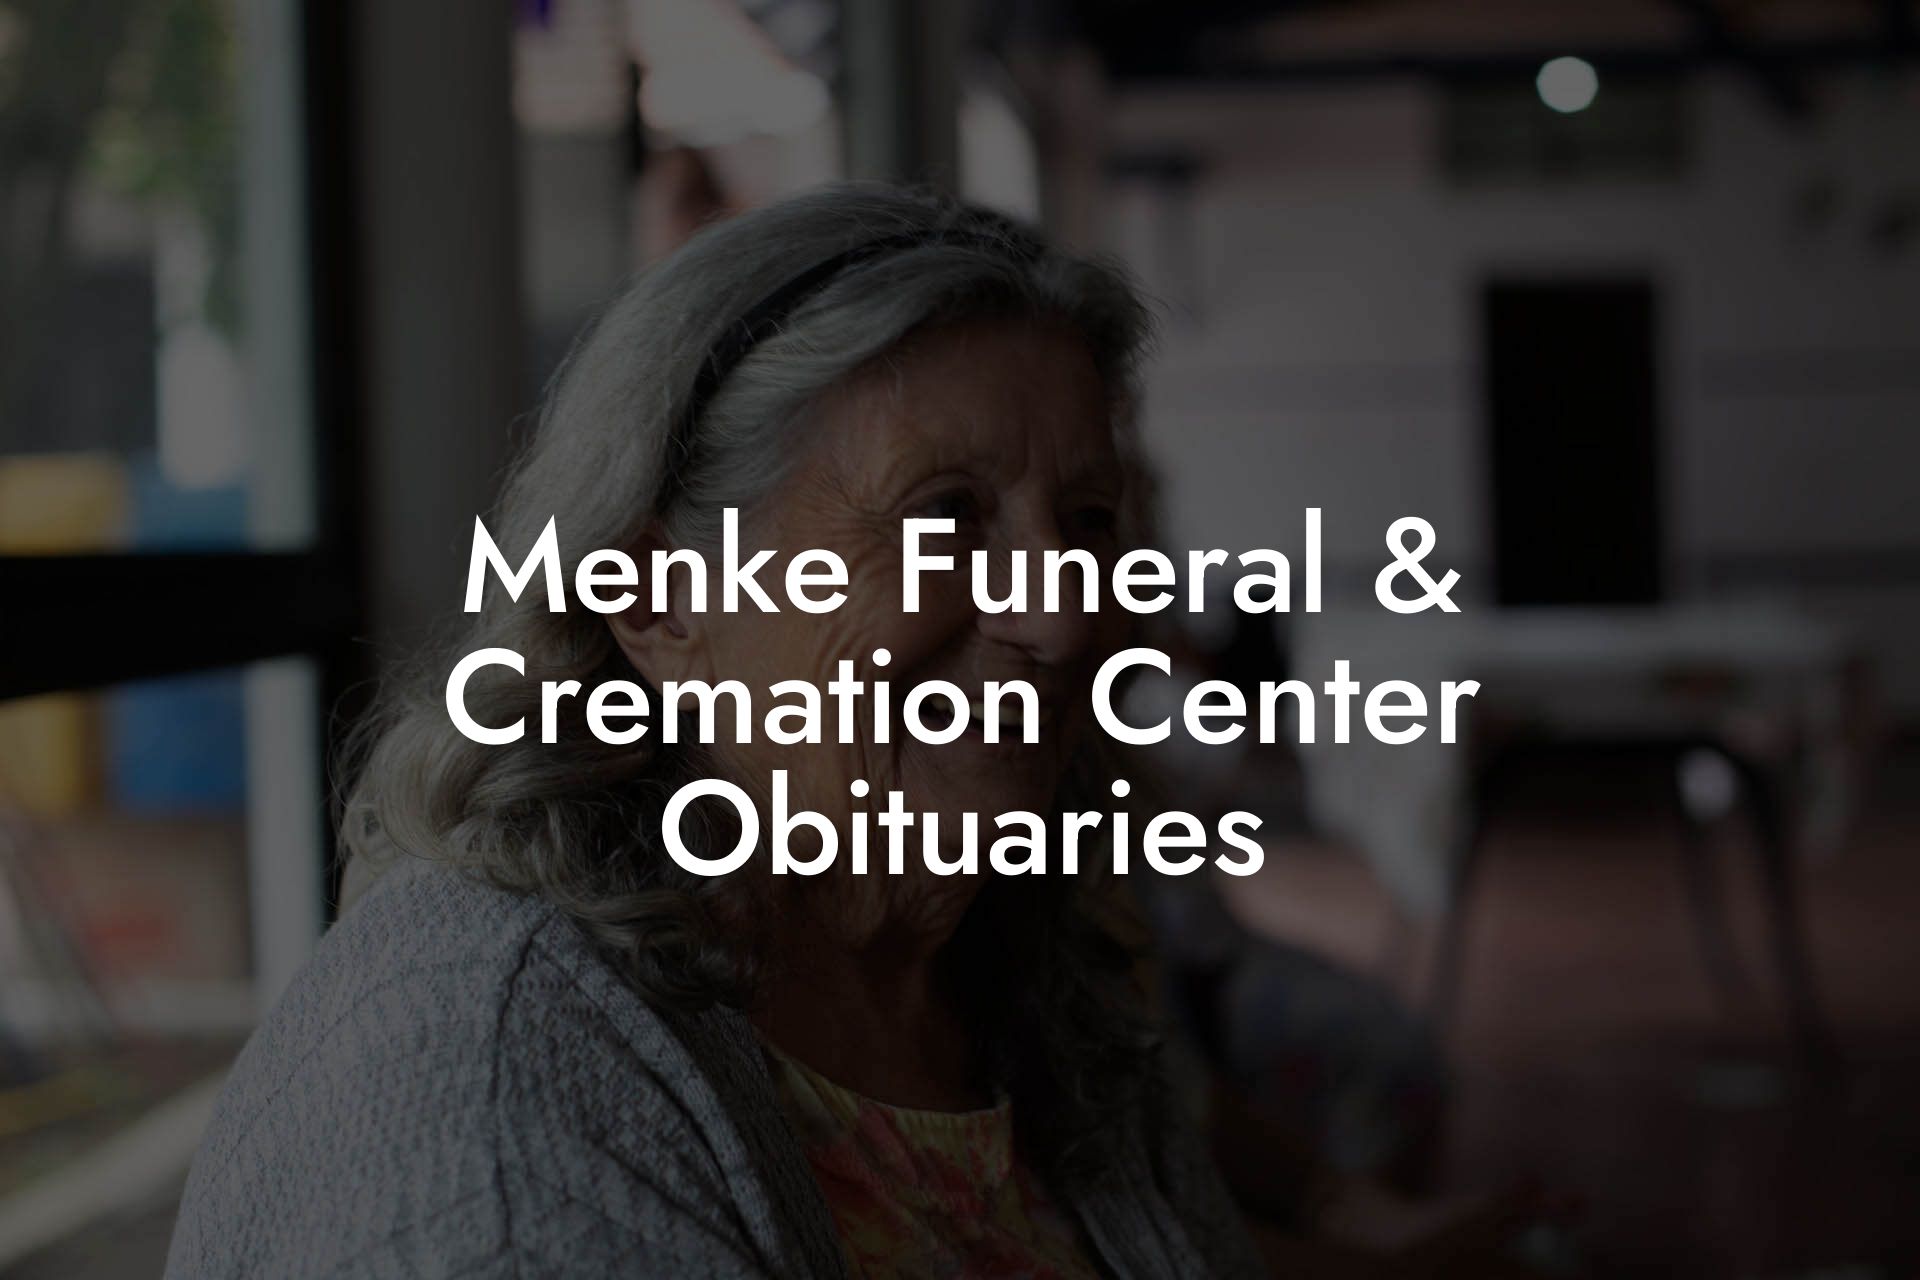 Menke Funeral & Cremation Center Obituaries